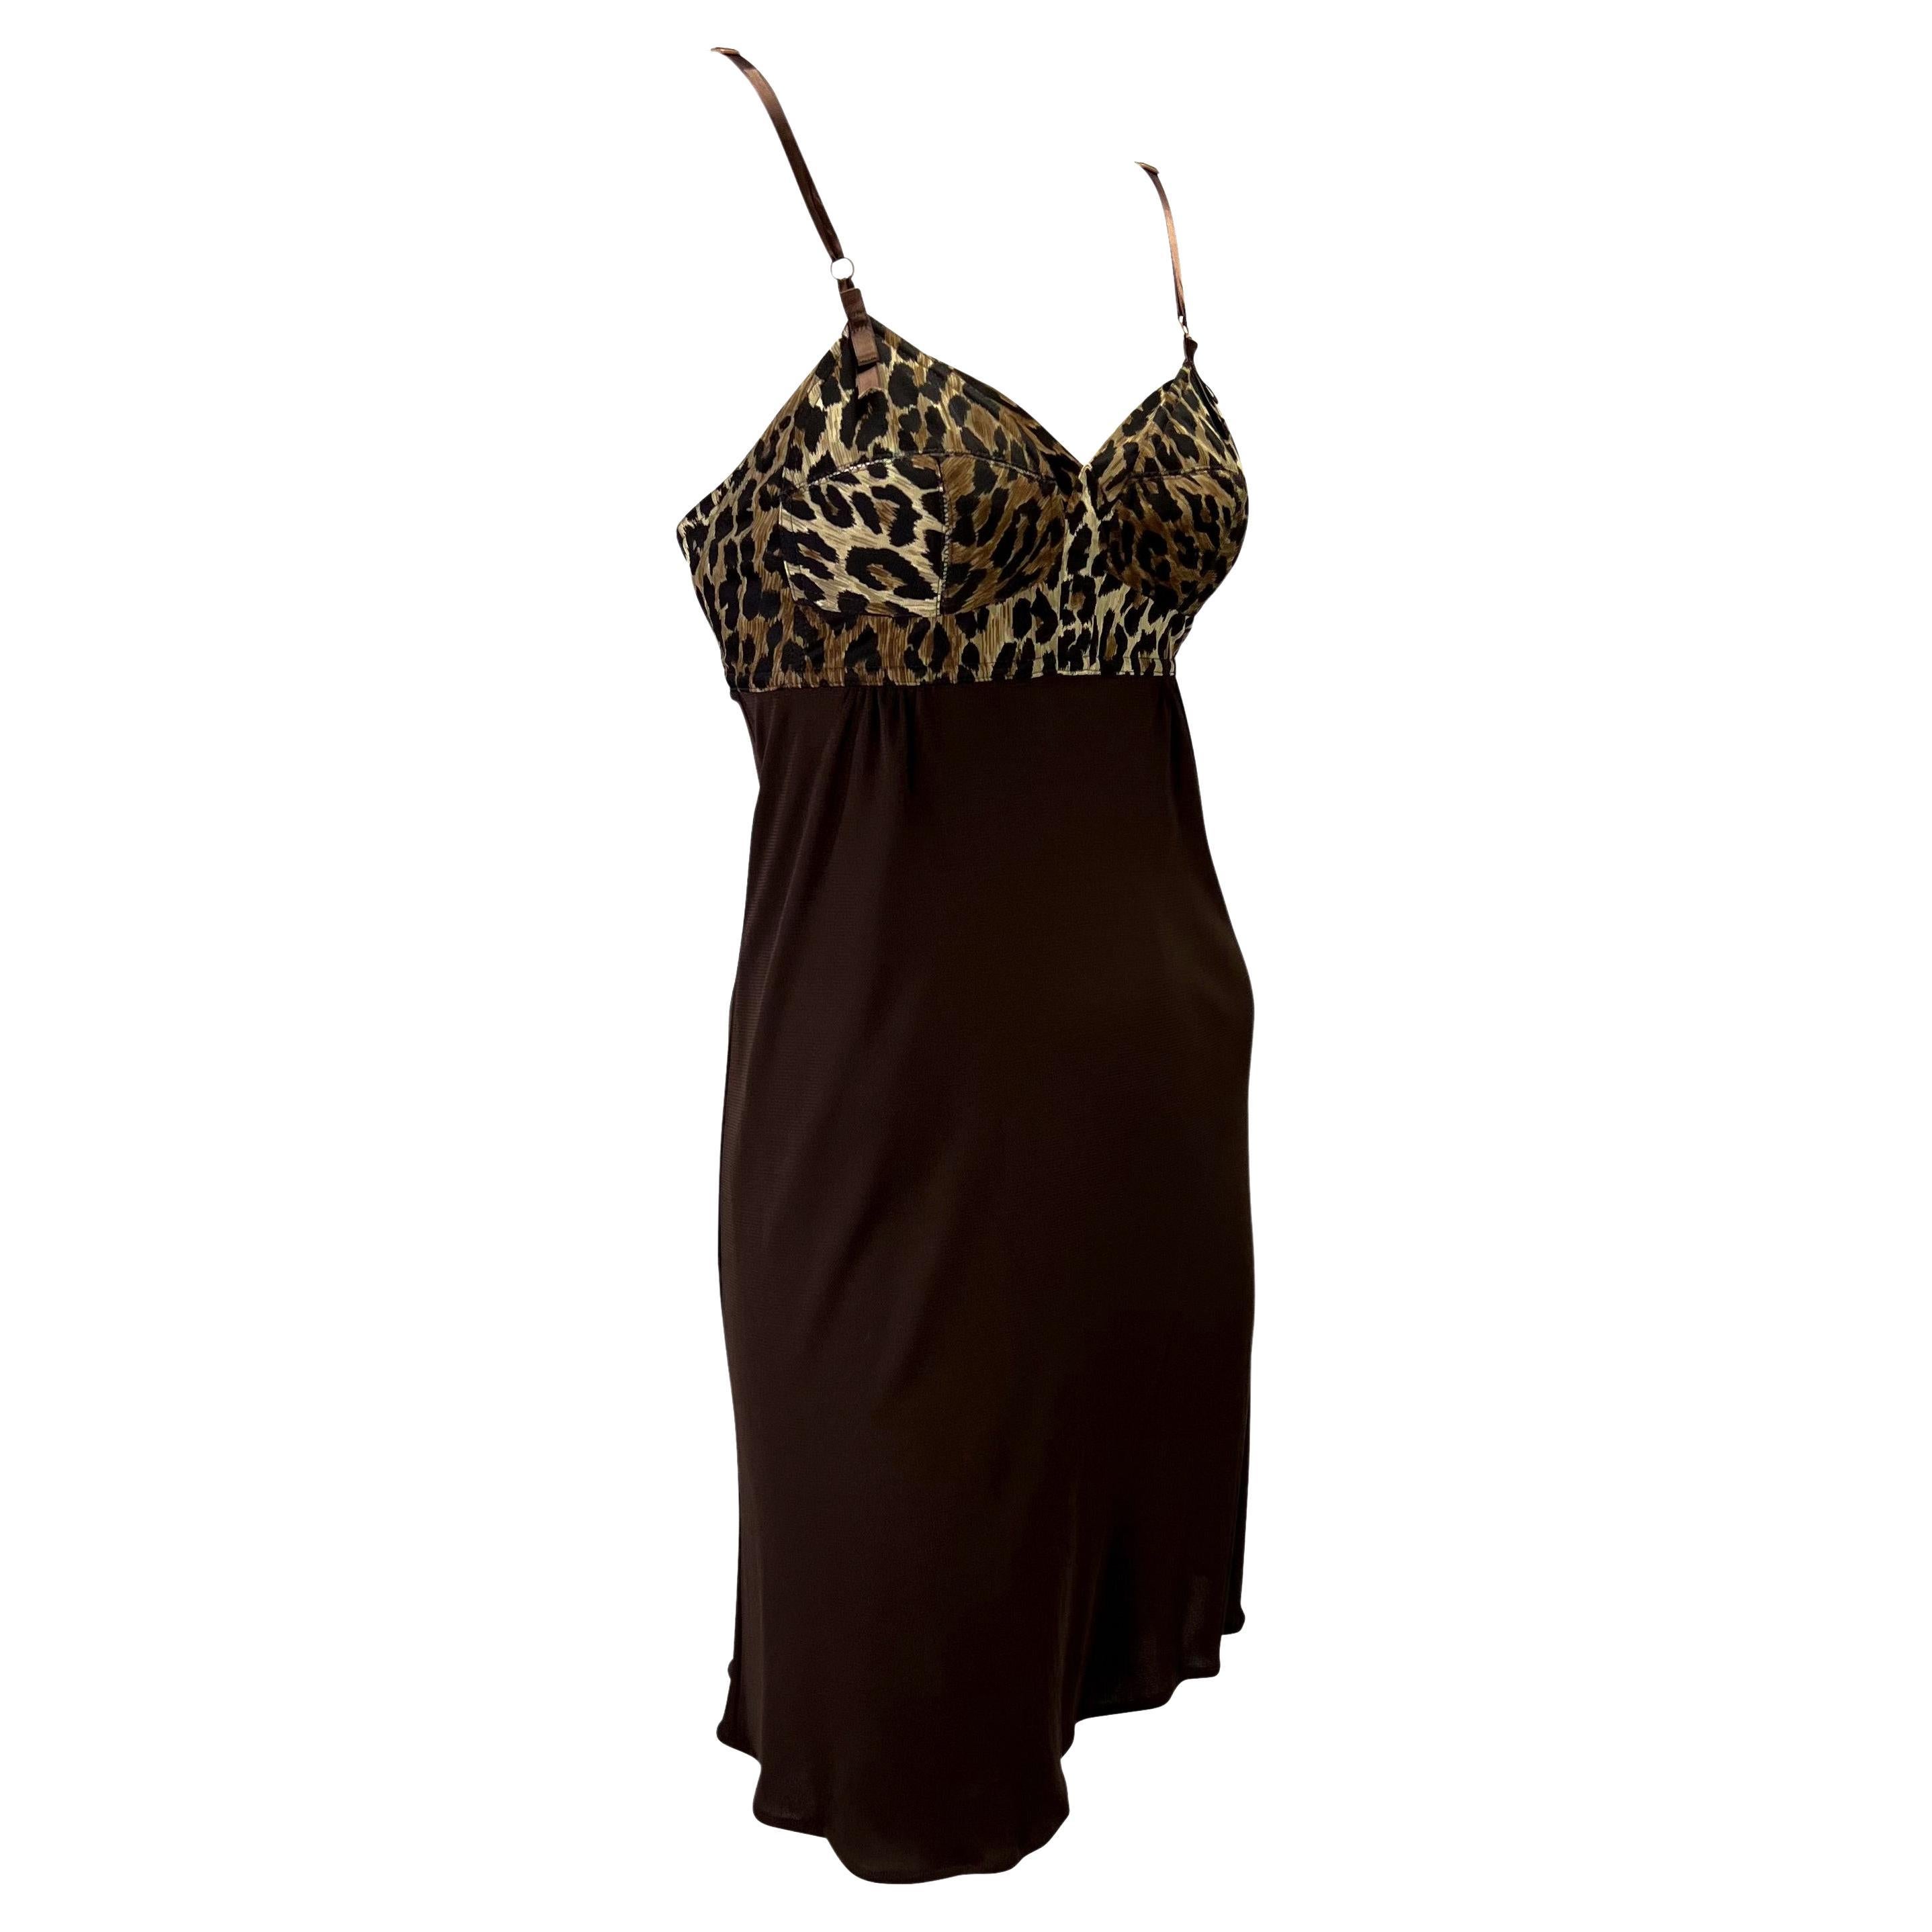 S/S 1997 Dolce & Gabbana Cheetah Print Sheer Brown Bustier Slip Dress For Sale 1